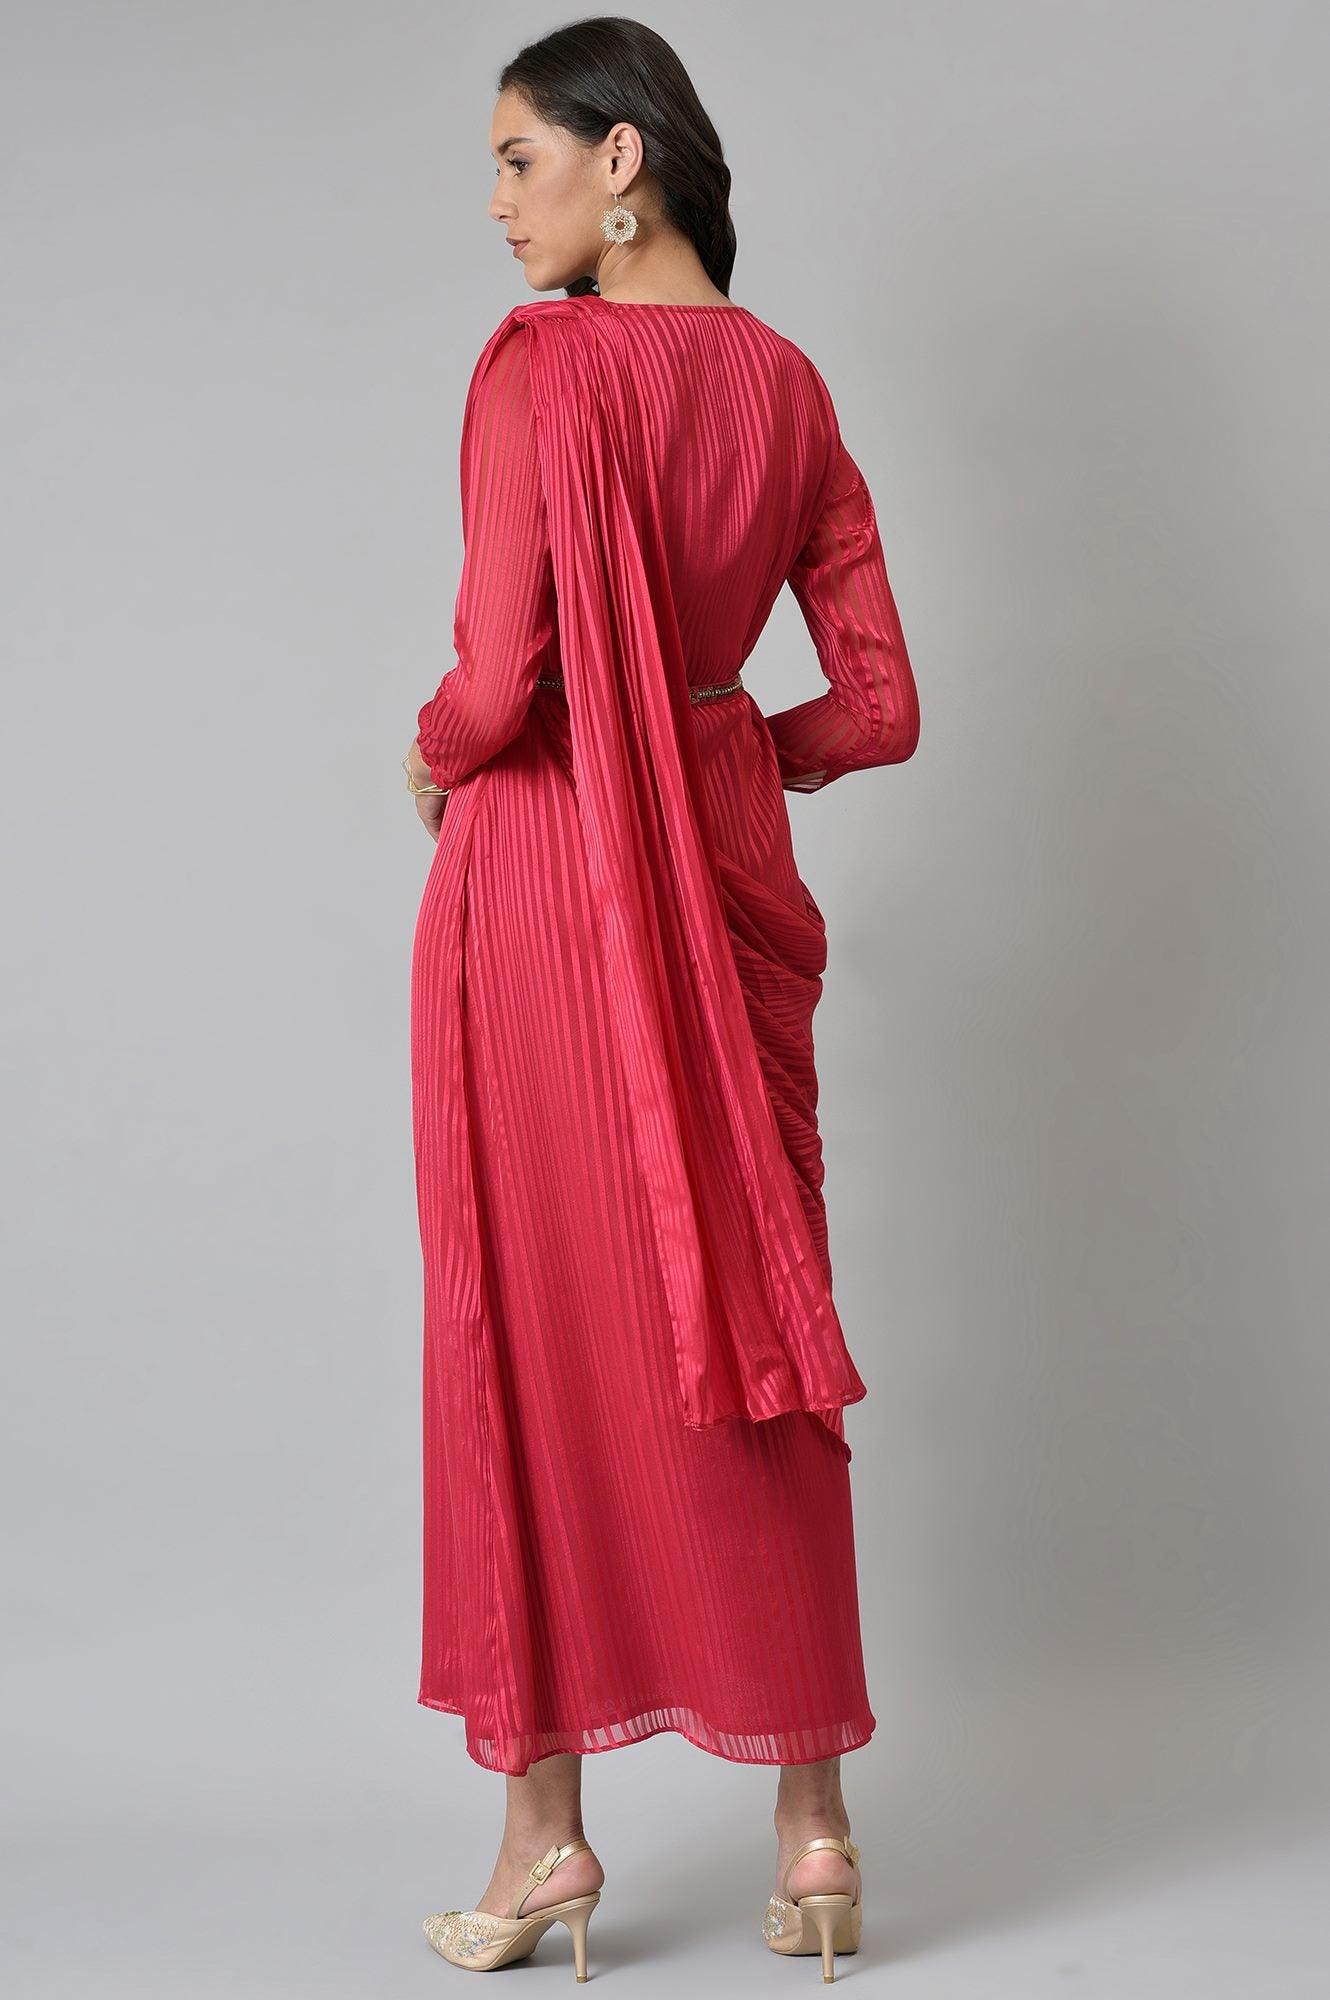 Coral Red Embroidered Predape Saree Dress - wforwoman